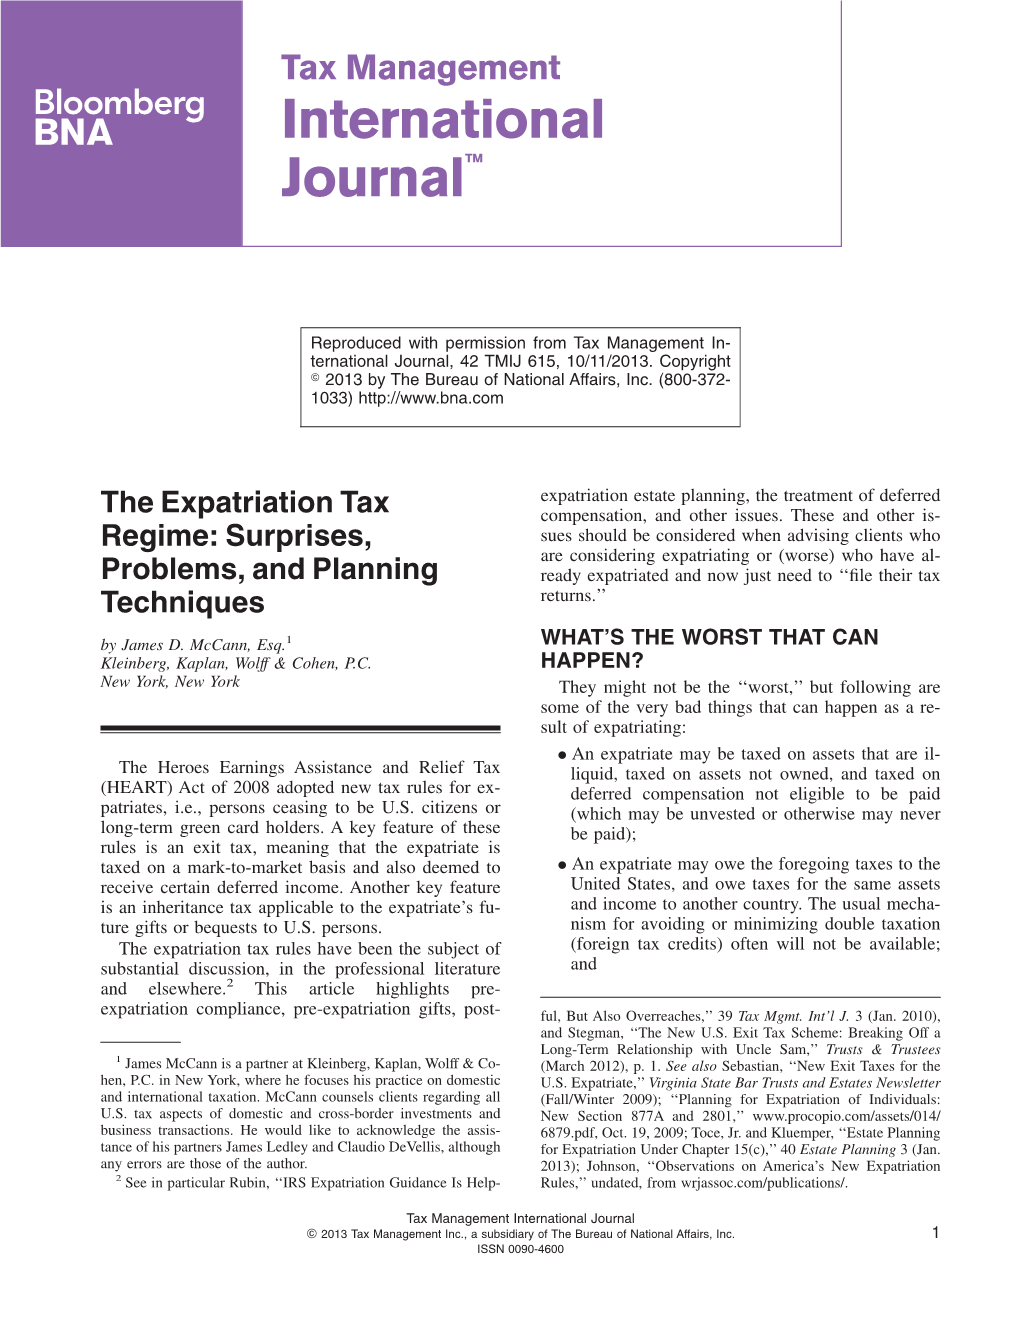 The Expatriation Tax Regime